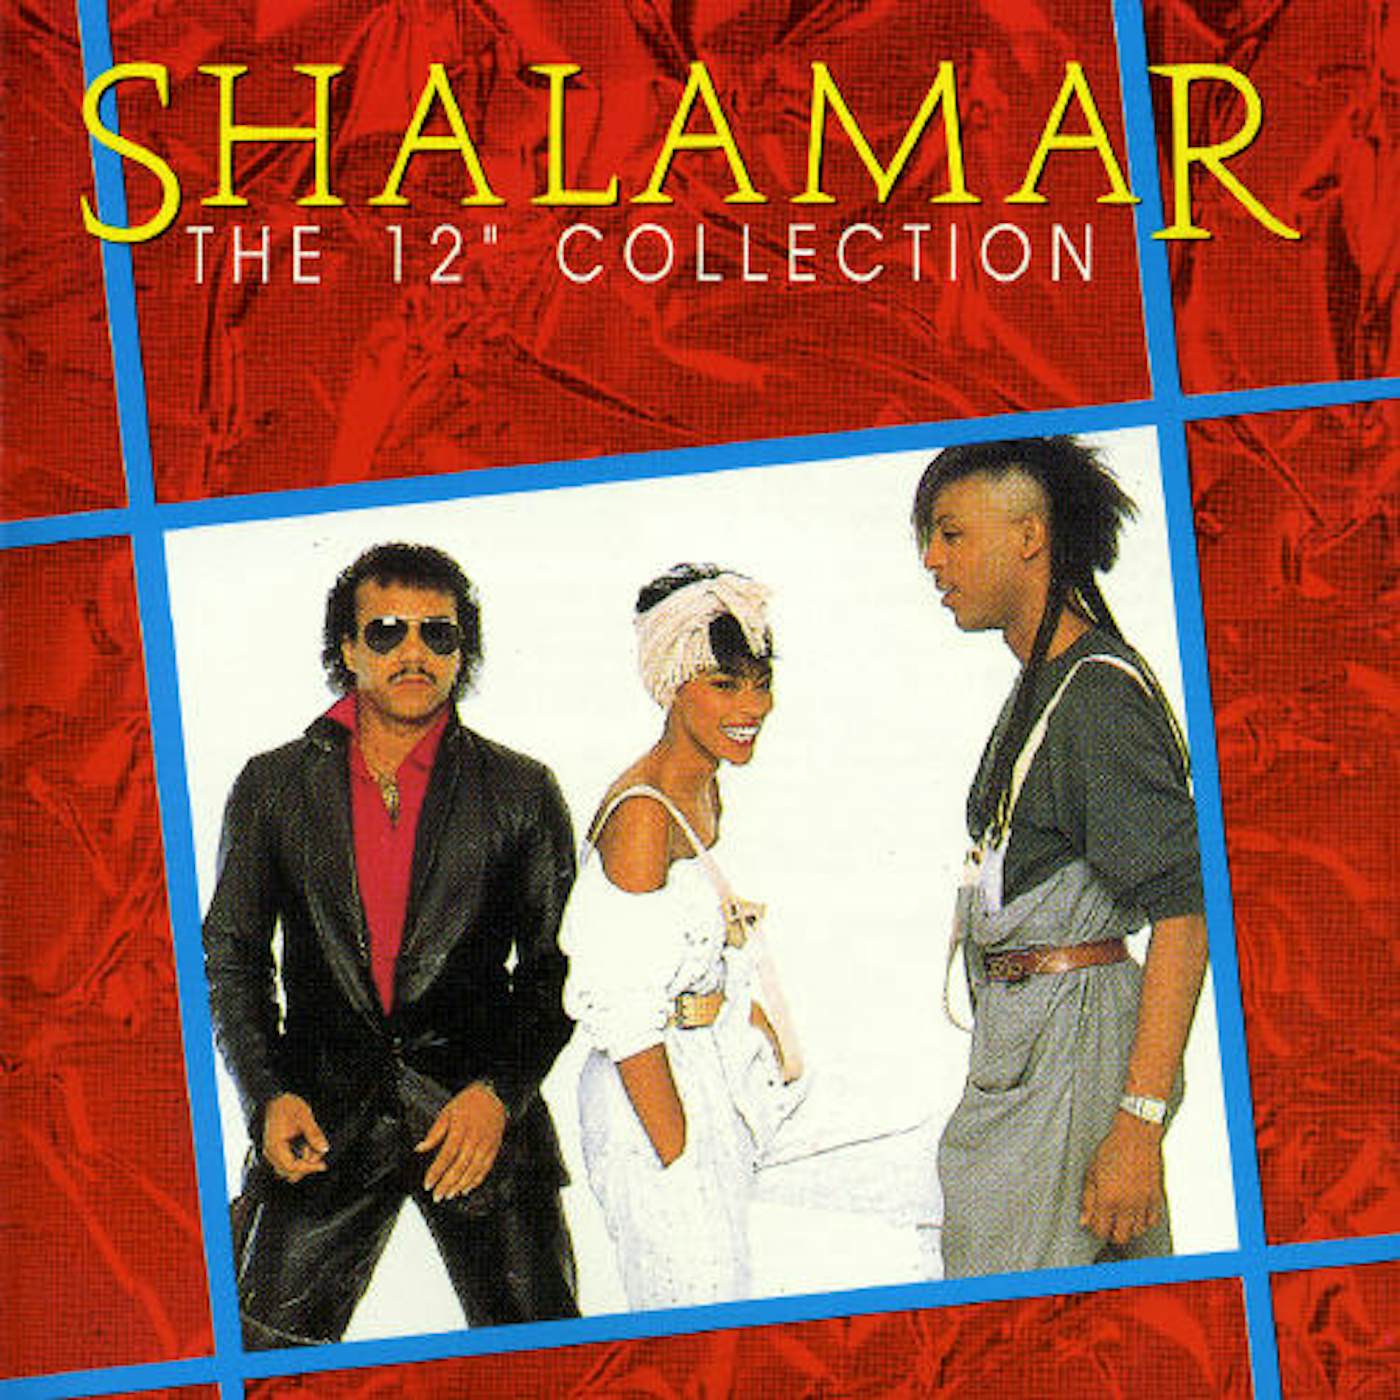 Shalamar 12 INCH COLLECTION CD